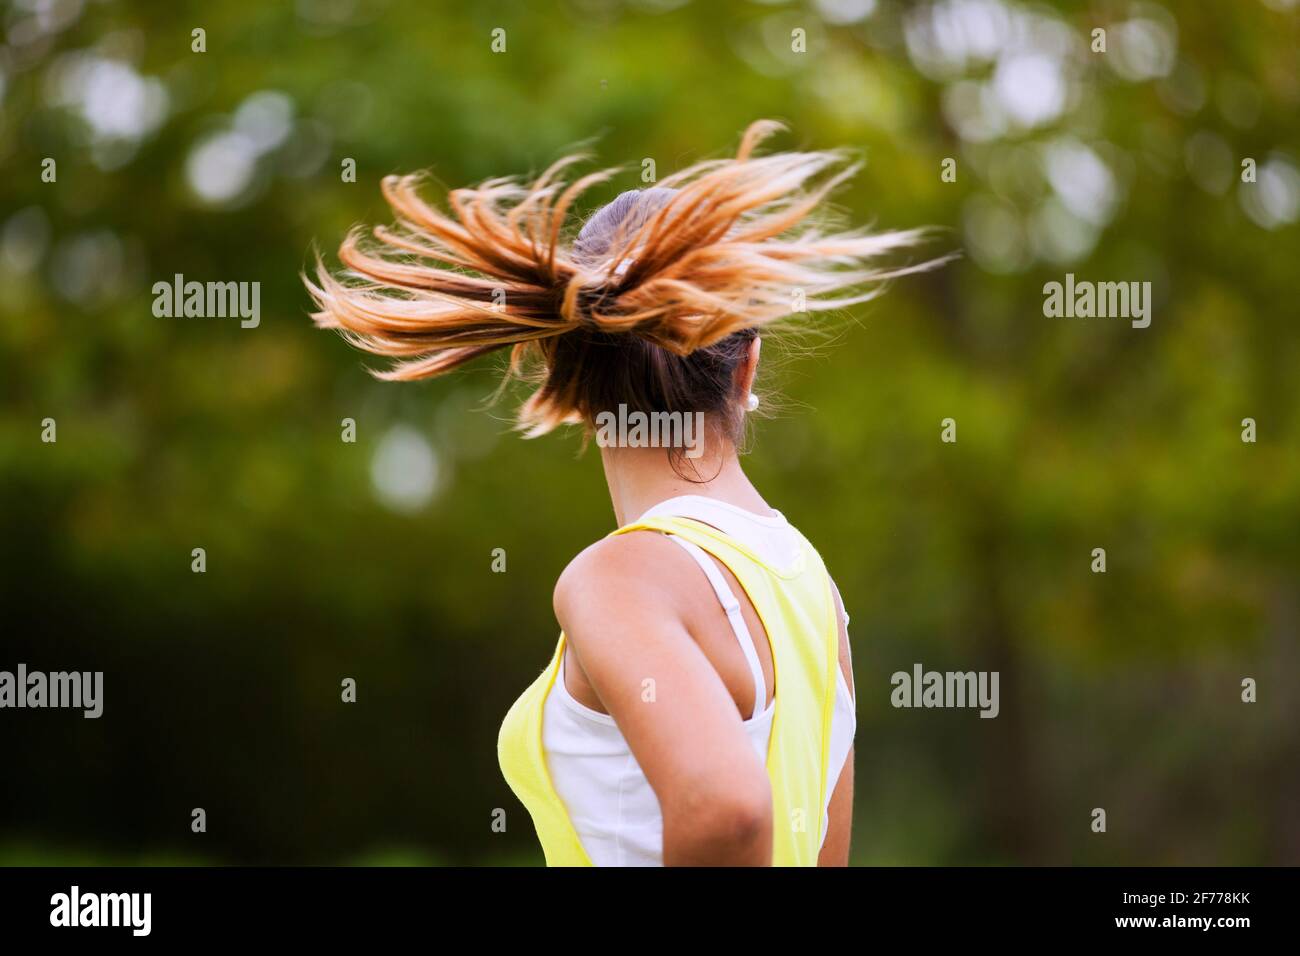 Frau mit fliegenden Haare Stockfoto